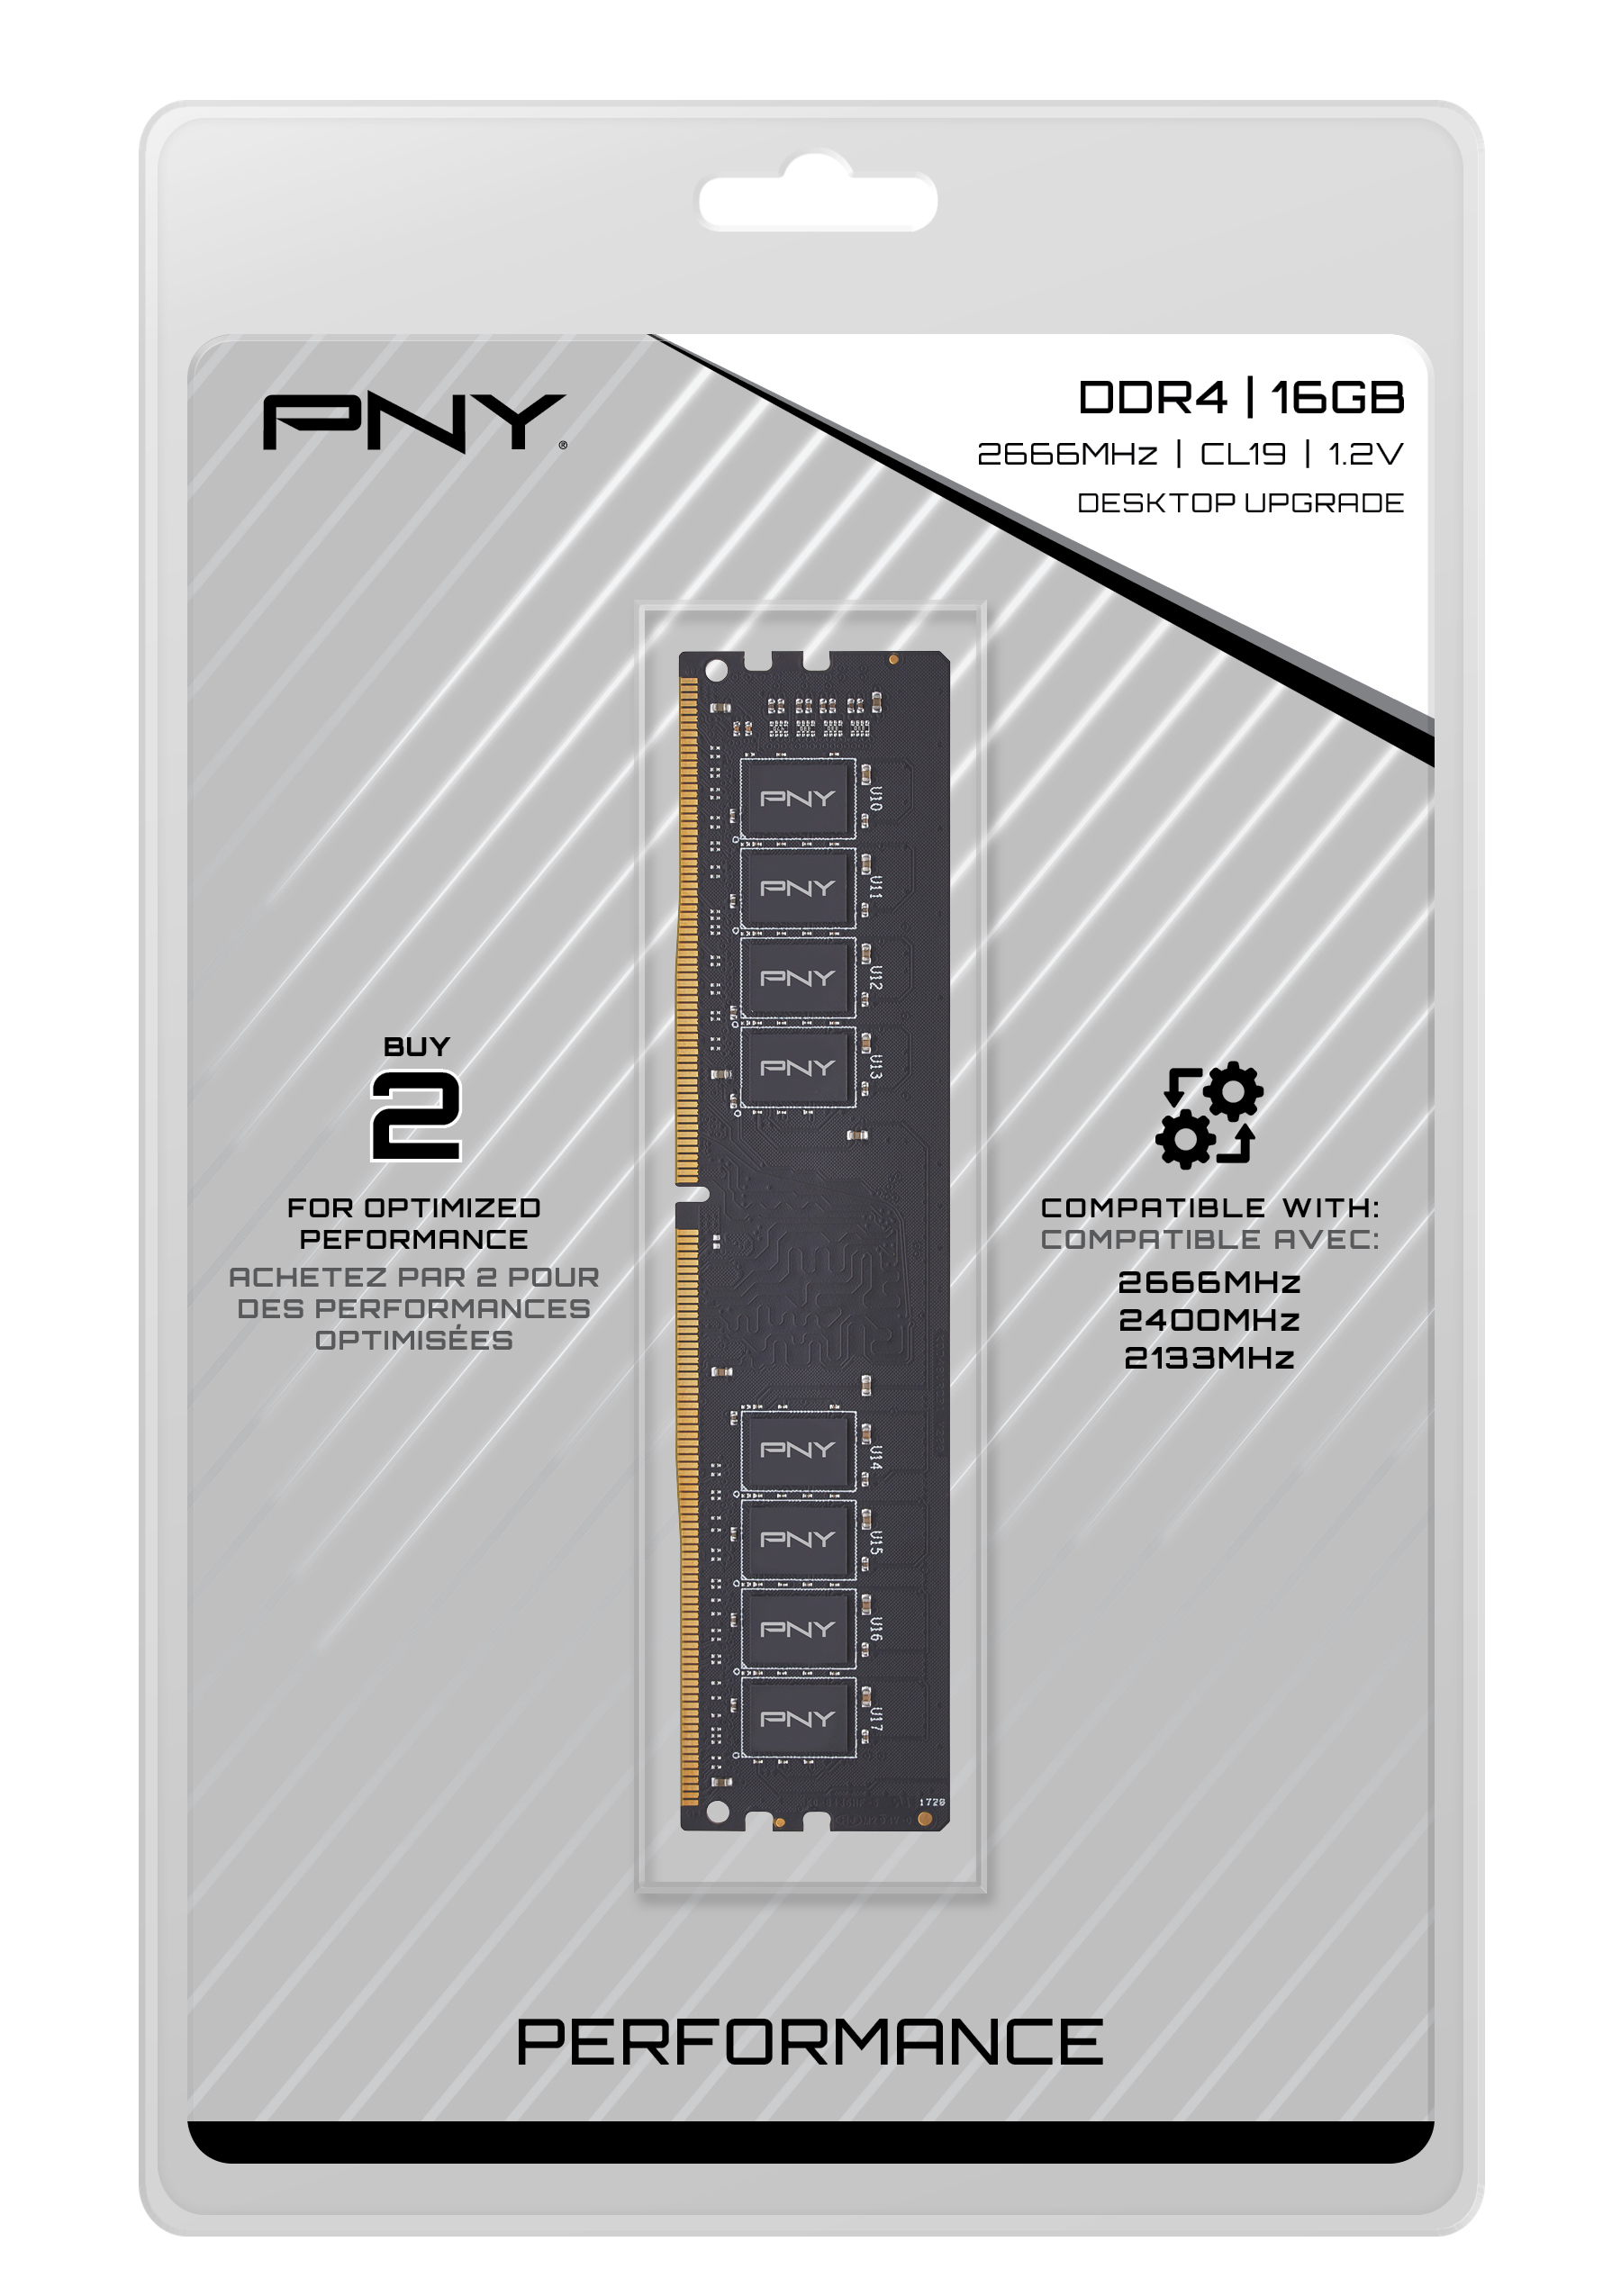 PNY 16GB Performance DDR4 2666MHz Desktop RAM Memory – (MD16GSD42666) - image 1 of 4